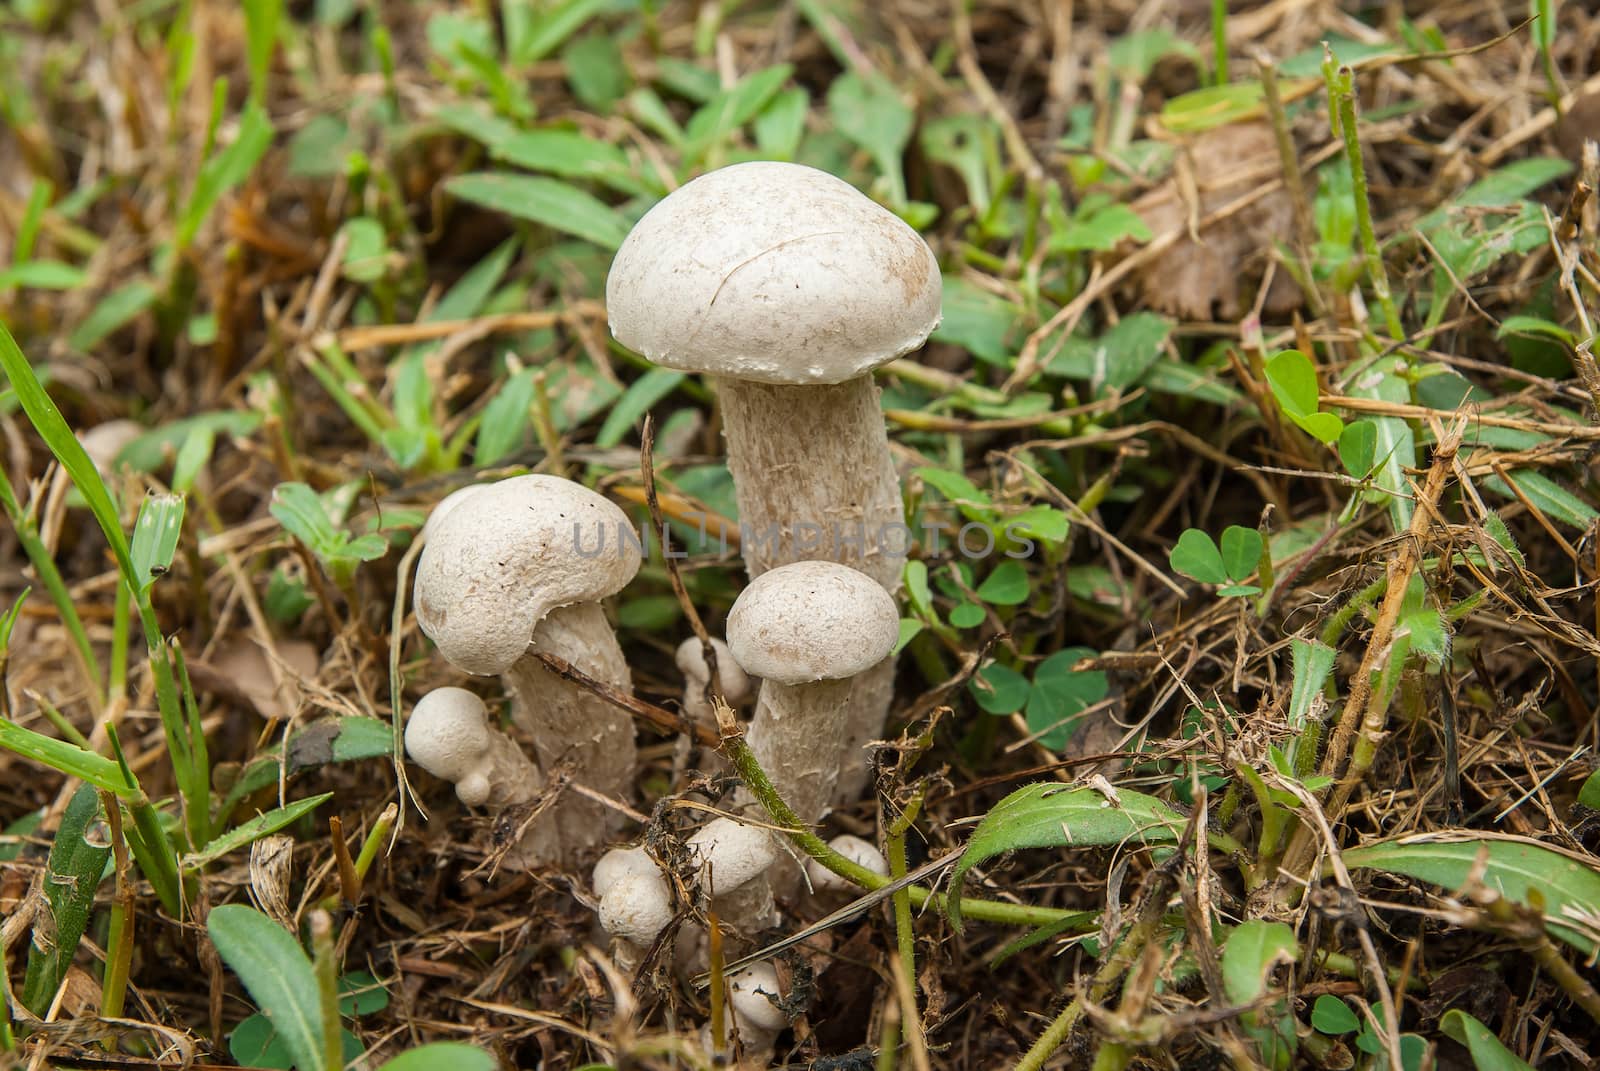 Poisonous mushrooms by seksan44